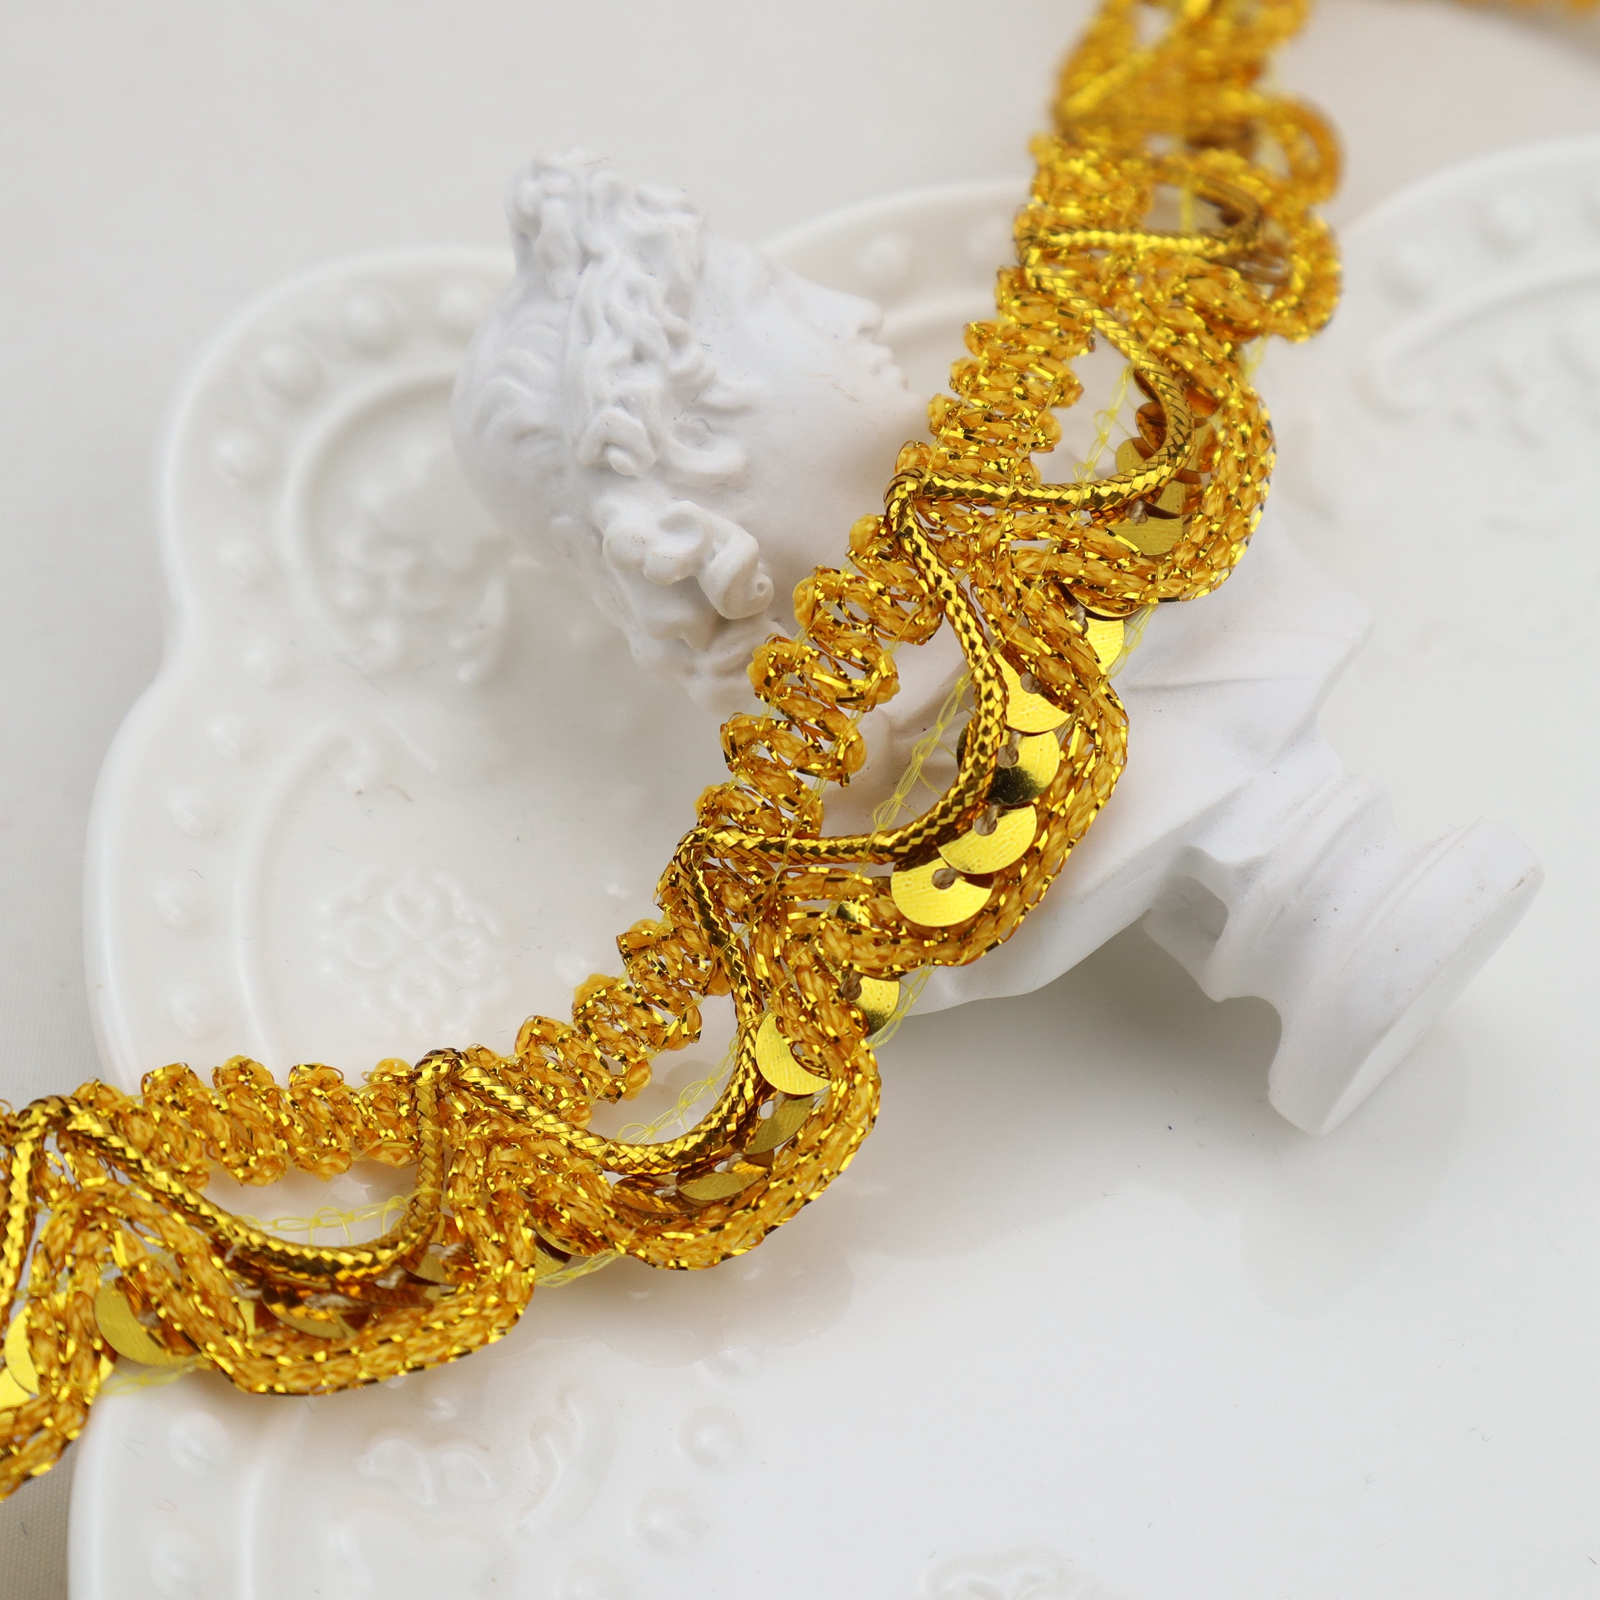  Expo International Gabrielle Decorative Braid Trim, 20-Yard,  Beige/Gold : Everything Else